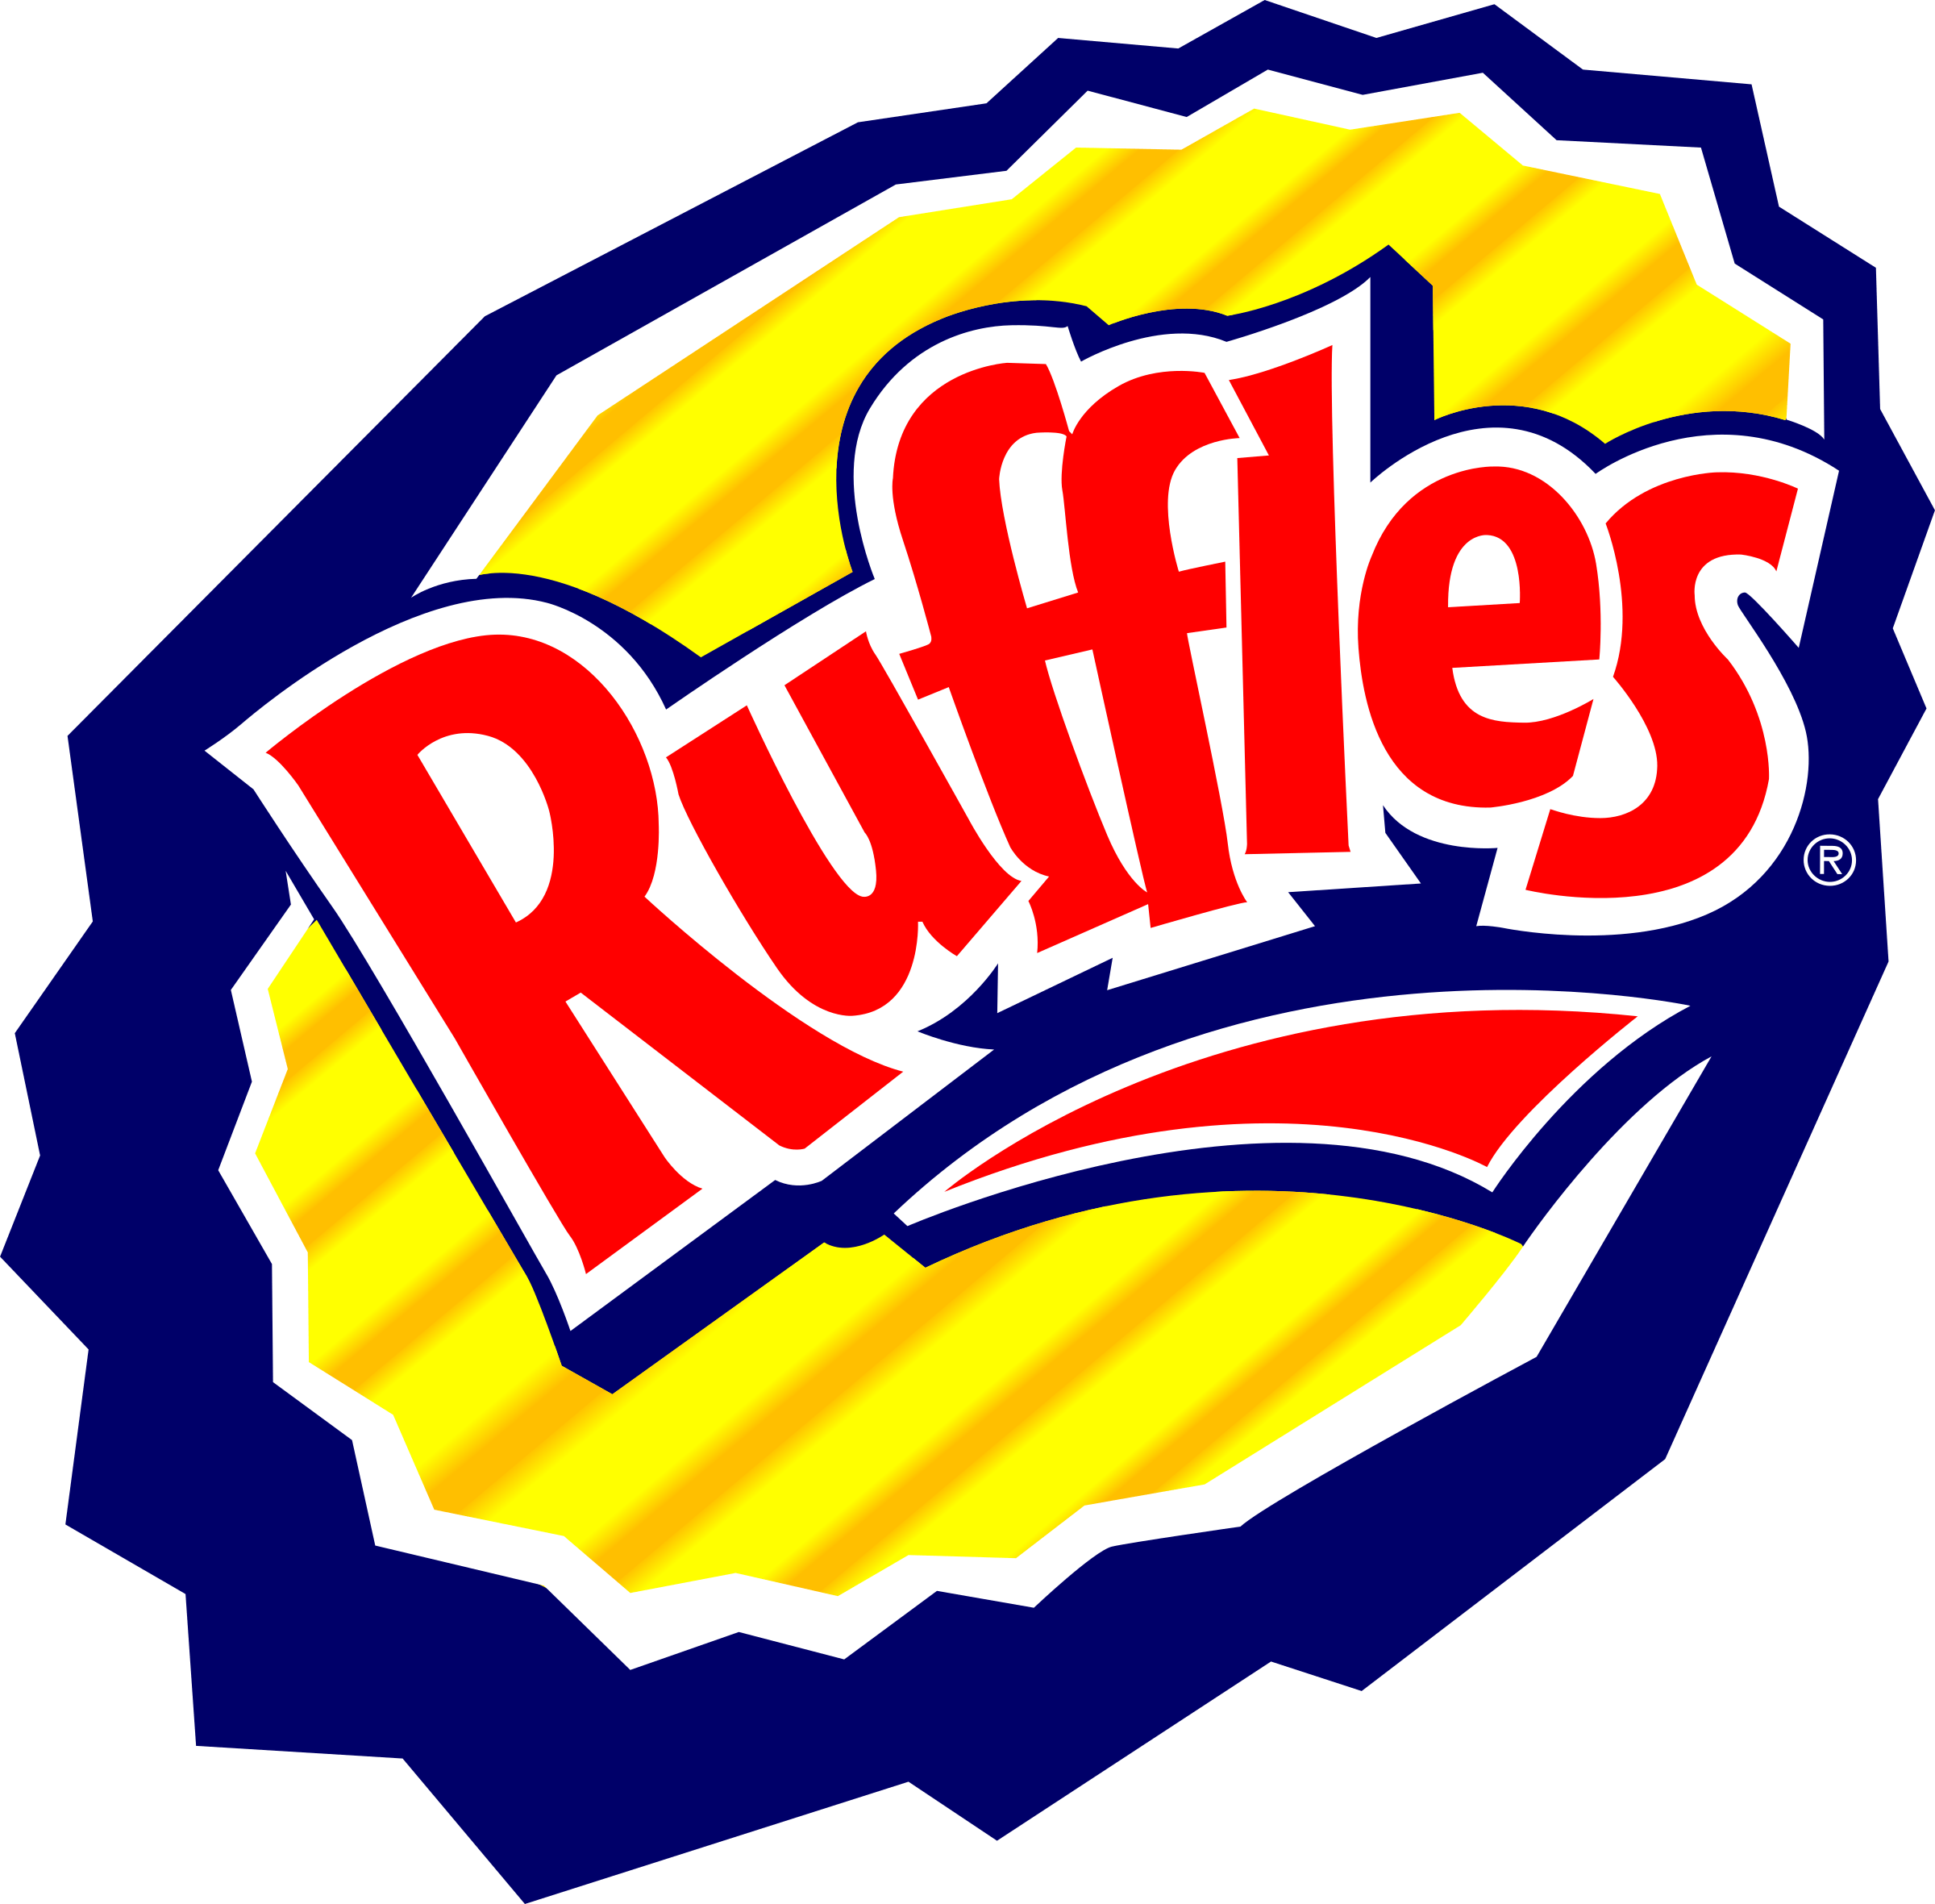 Ruffles Logo - Ruffles Logo PNG Transparent & SVG Vector - Freebie Supply